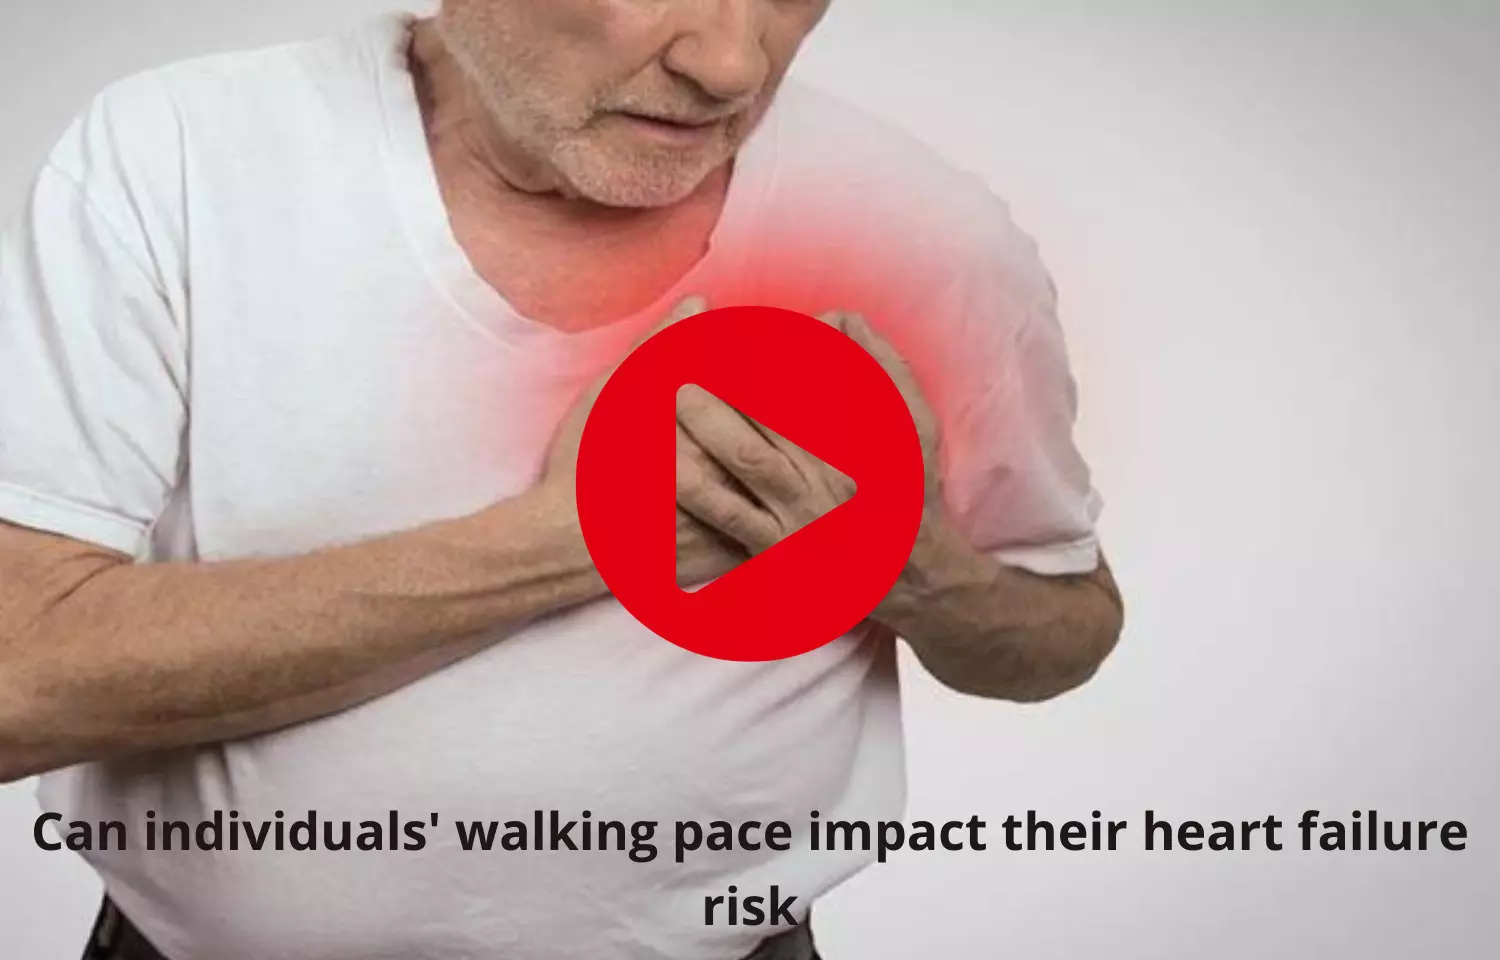 Walking pace to impact their heart failure risk